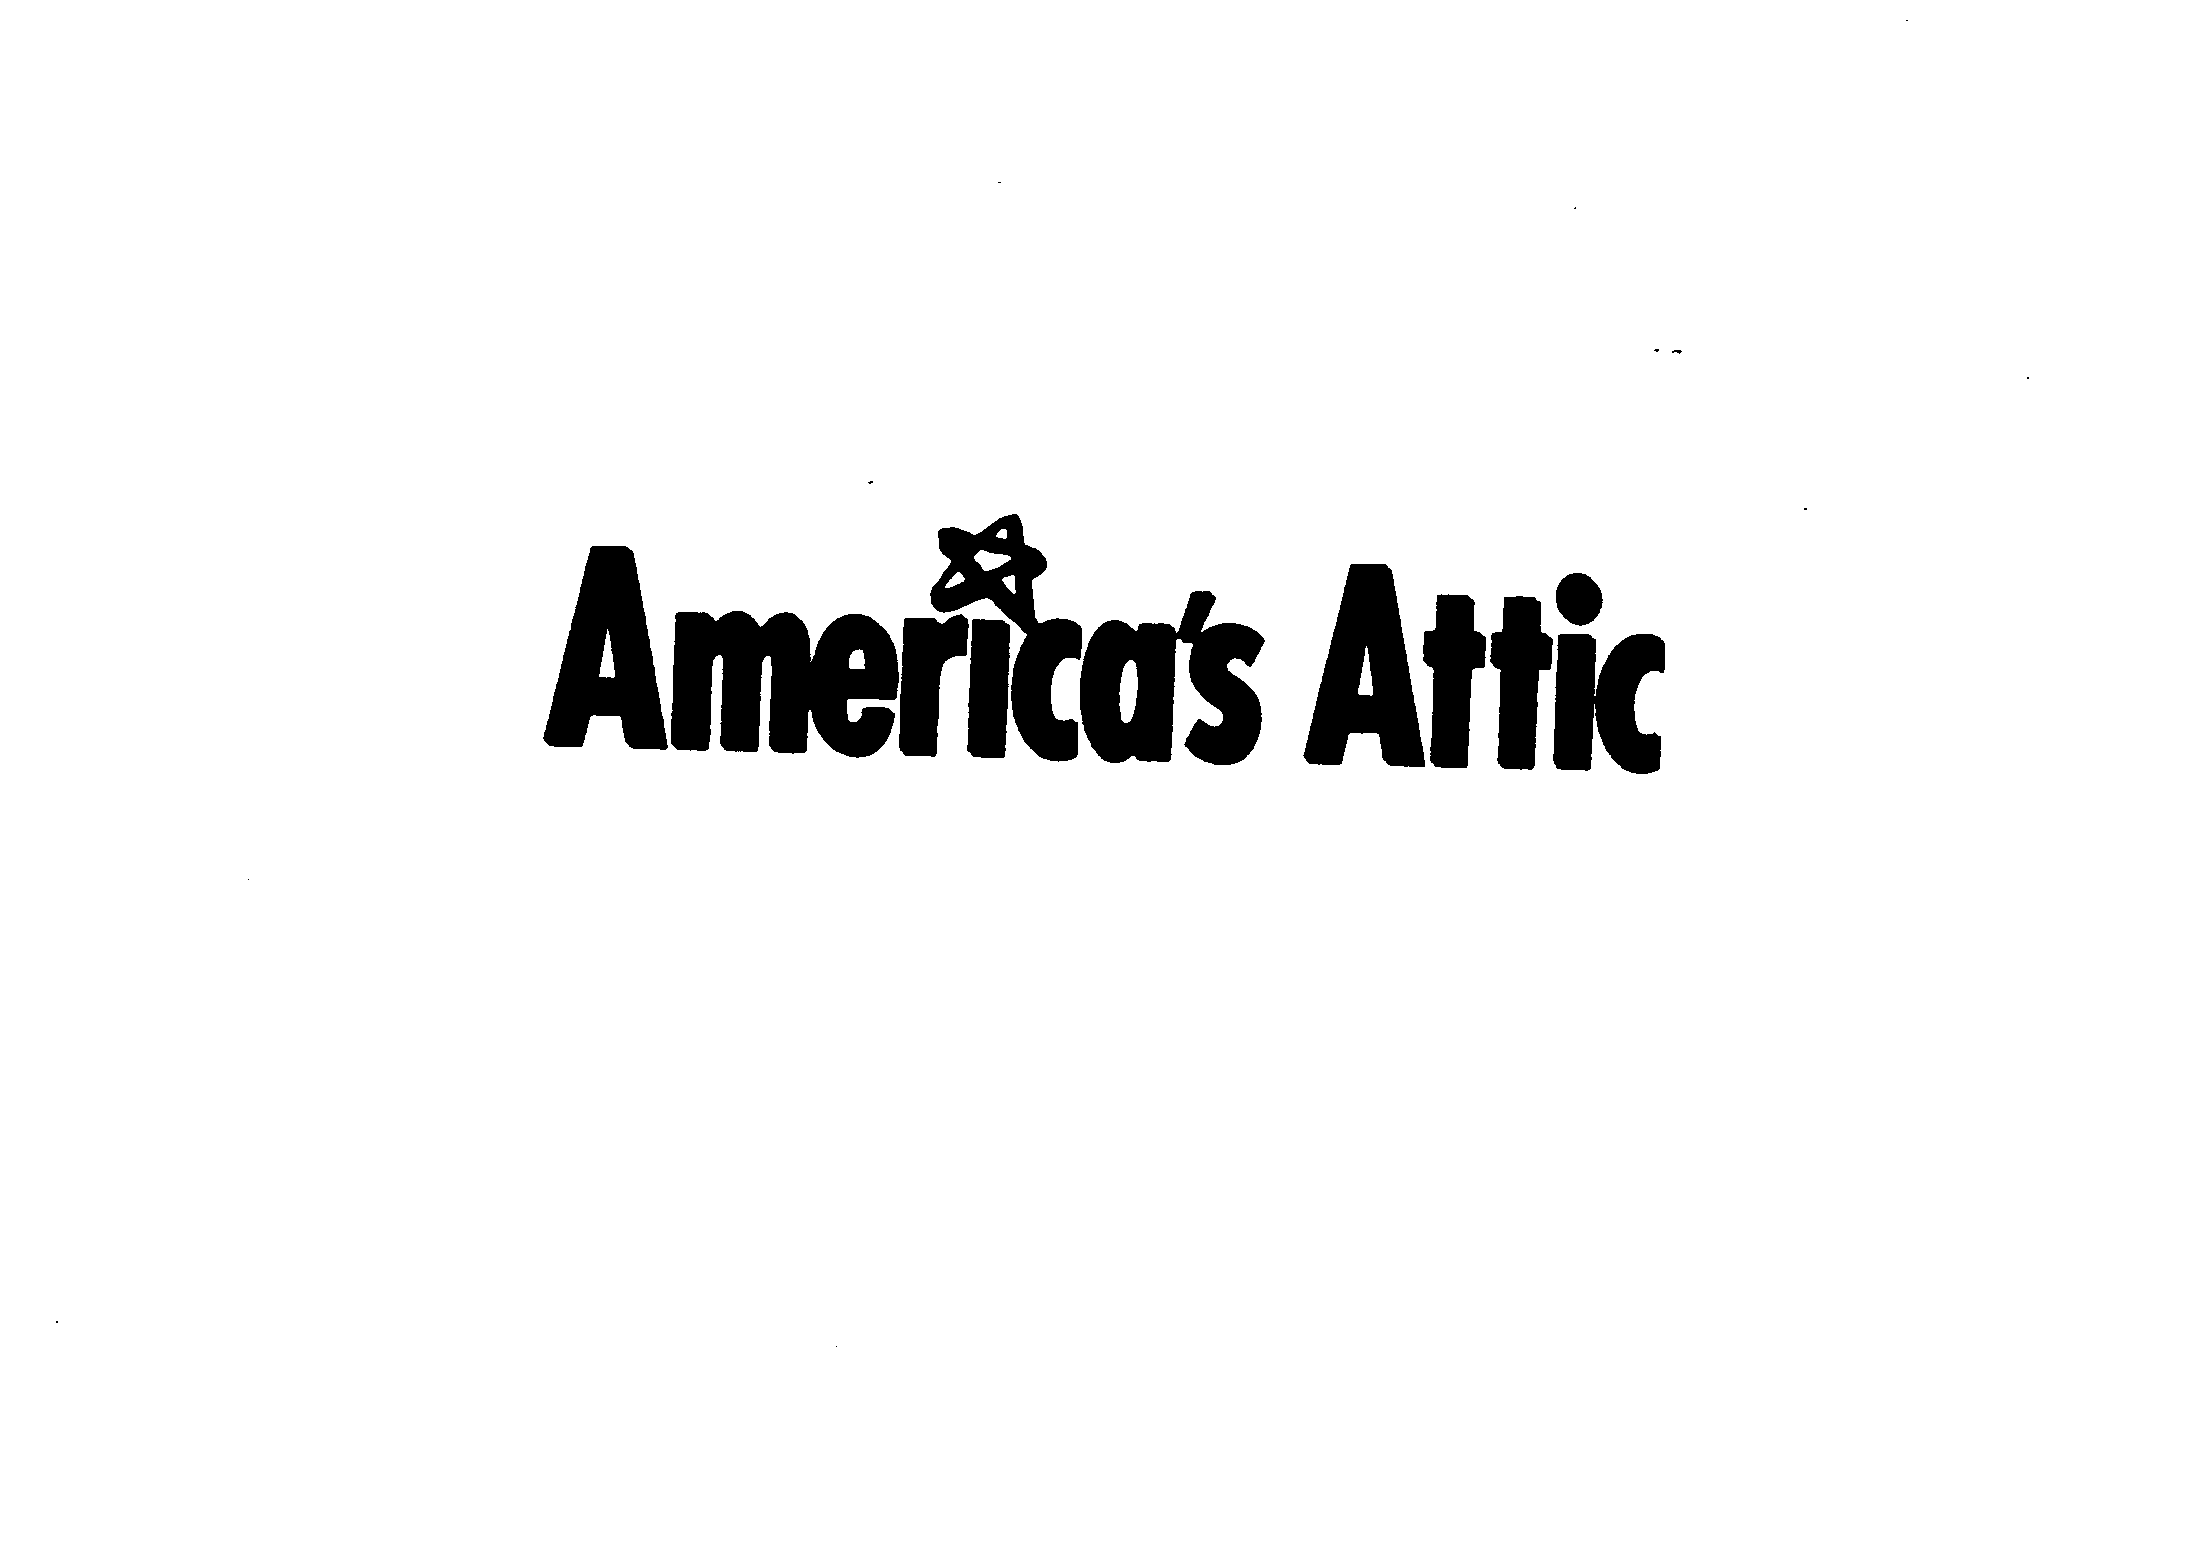  AMERICA'S ATTIC